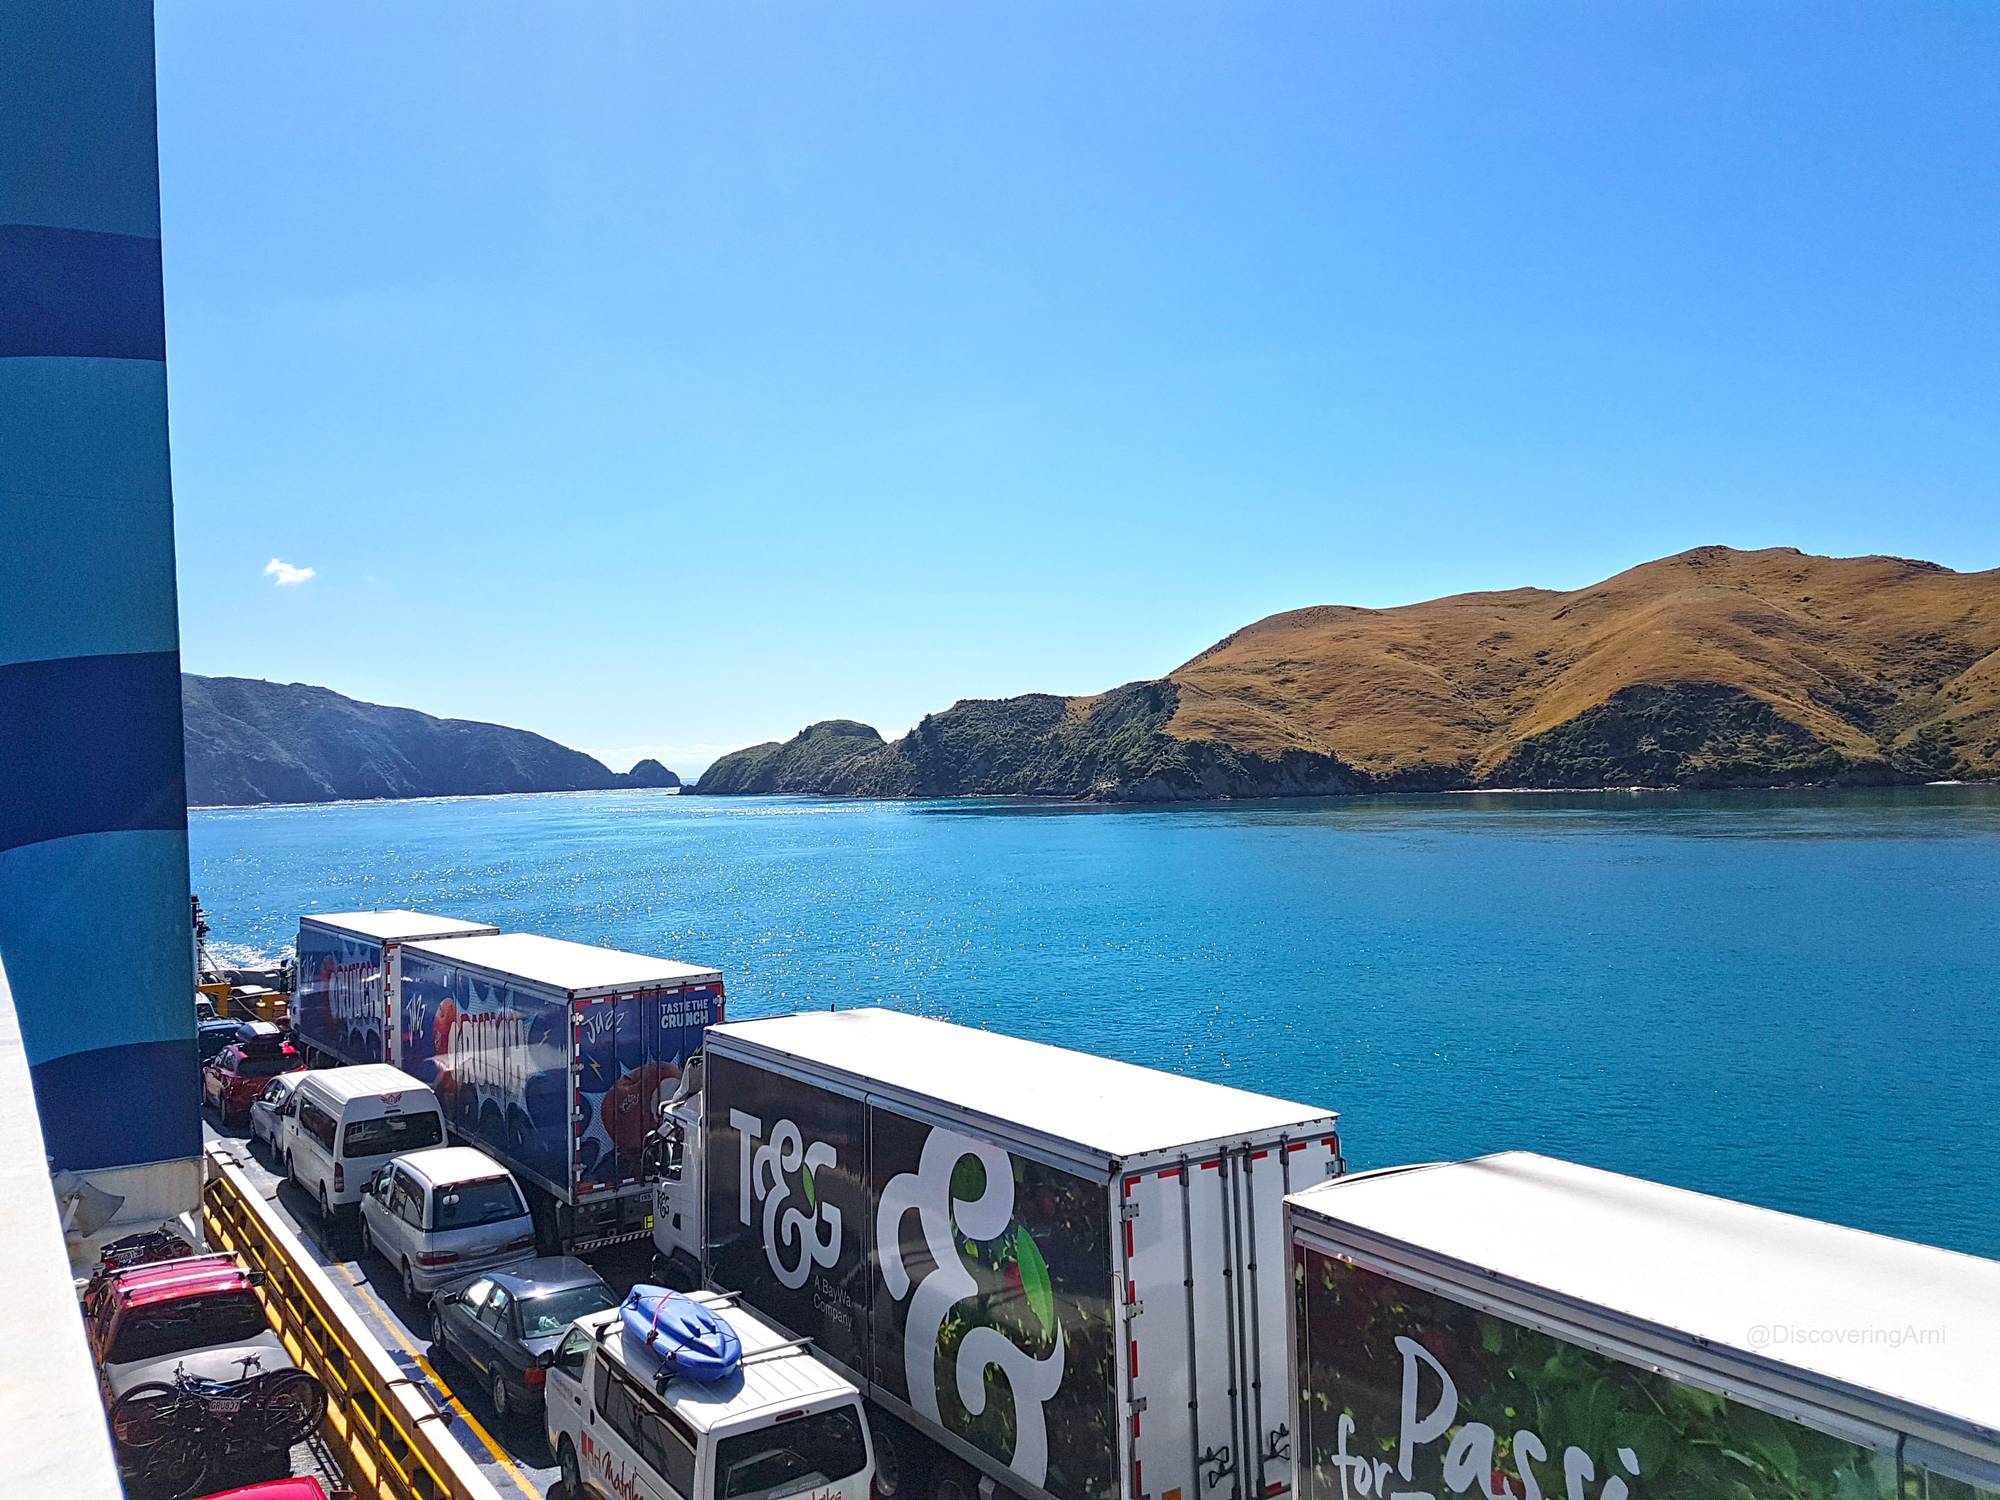 Interislander Ferry, Cook Strait, New Zealand